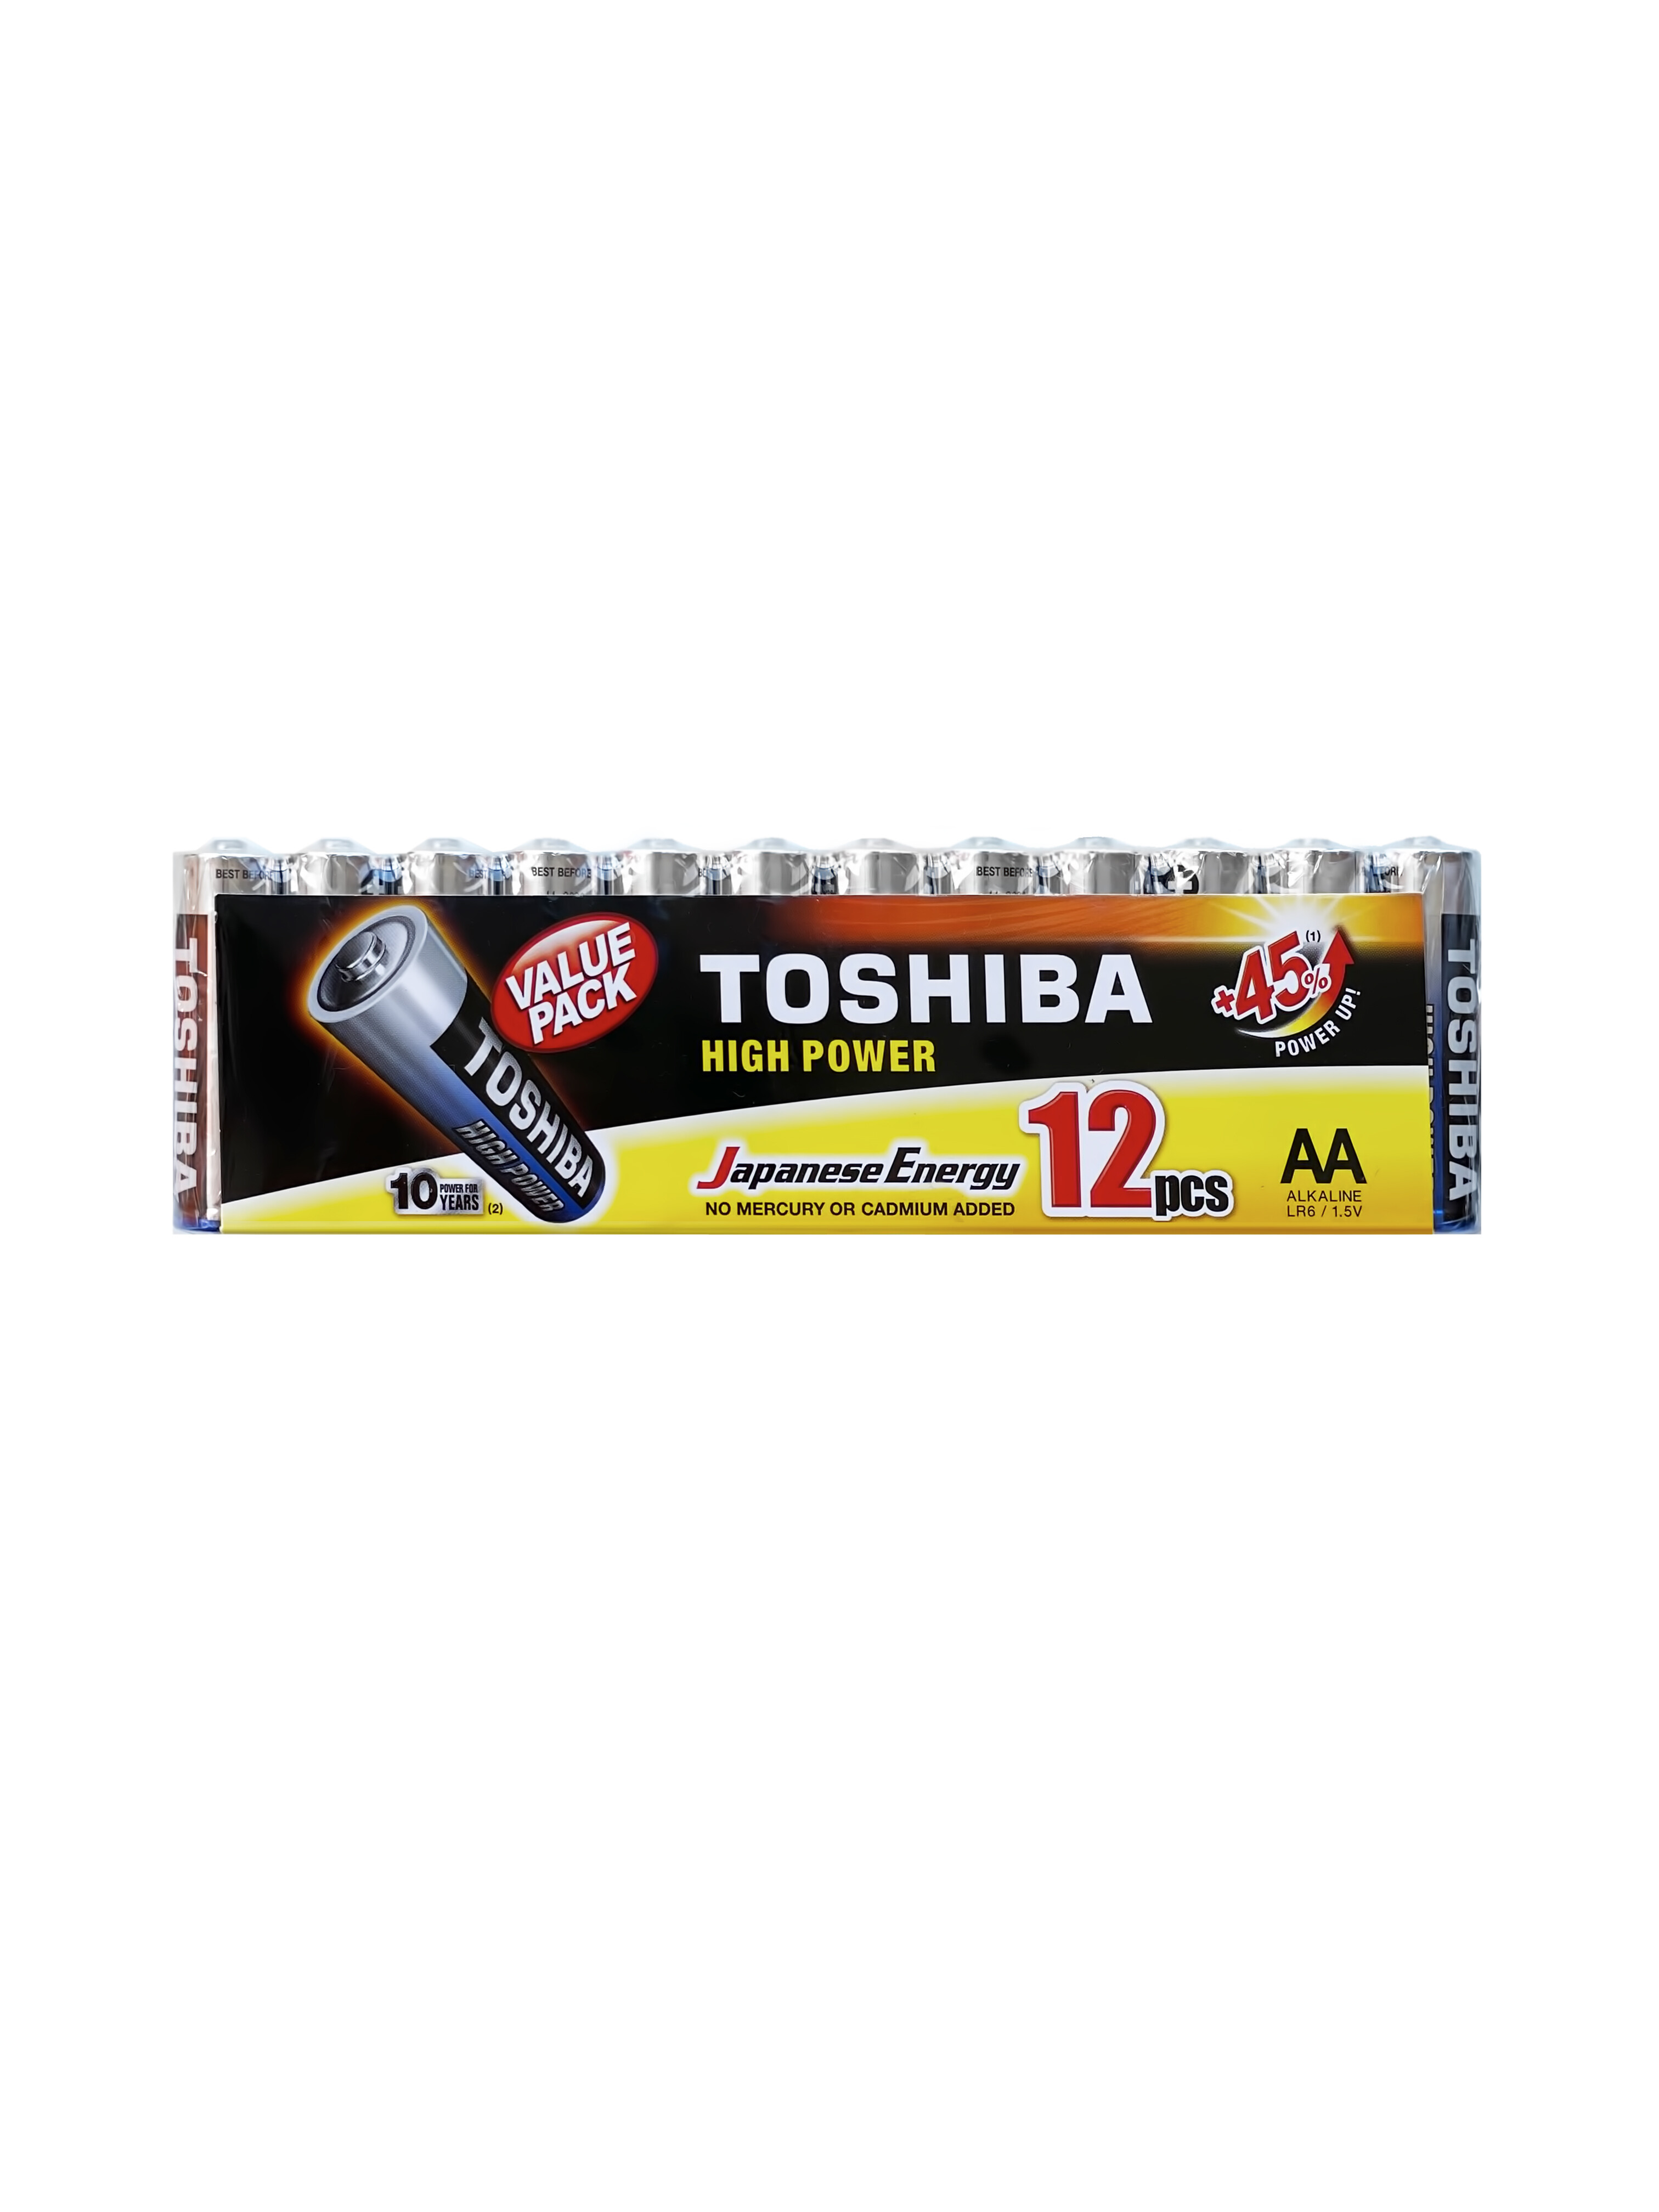 Батарейки Toshiba LR6 щелочные (alkaline) ПАЛЬЧИК High Power (12шт) AA 1,5V батарейки toshiba lr6 щелочные alkaline пальчик high power 12шт aa 1 5v